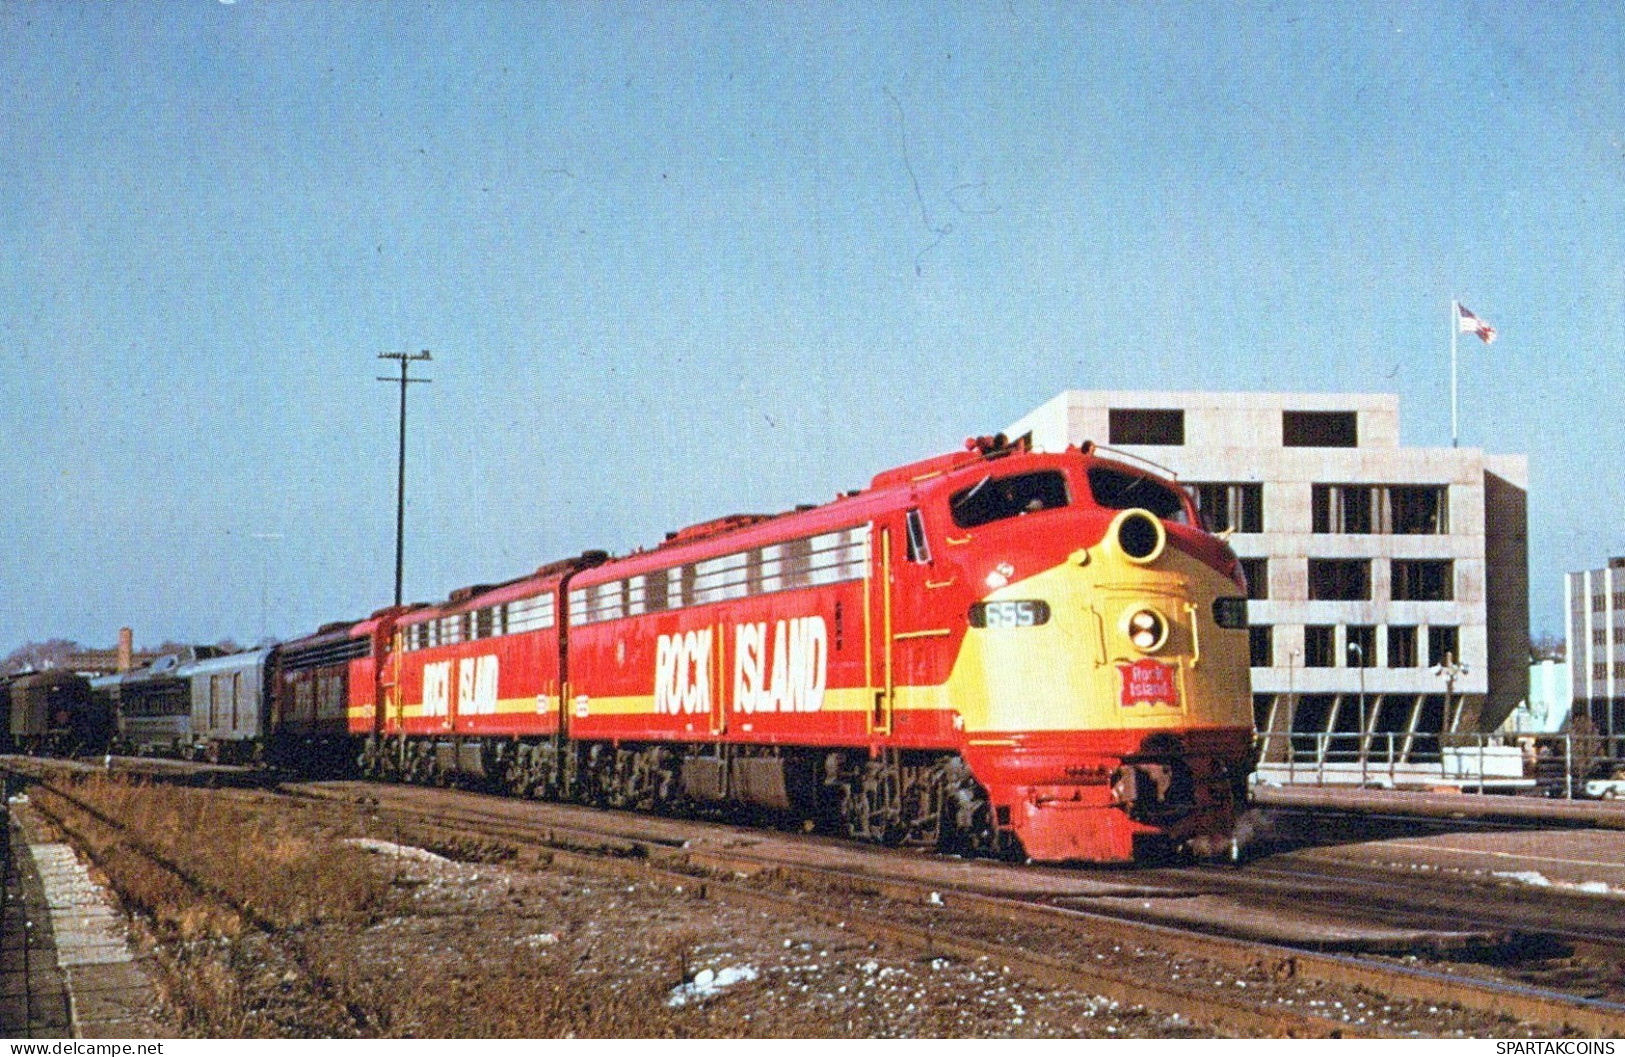 TREN TRANSPORTE Ferroviario Vintage Tarjeta Postal CPSMF #PAA467.A - Trains